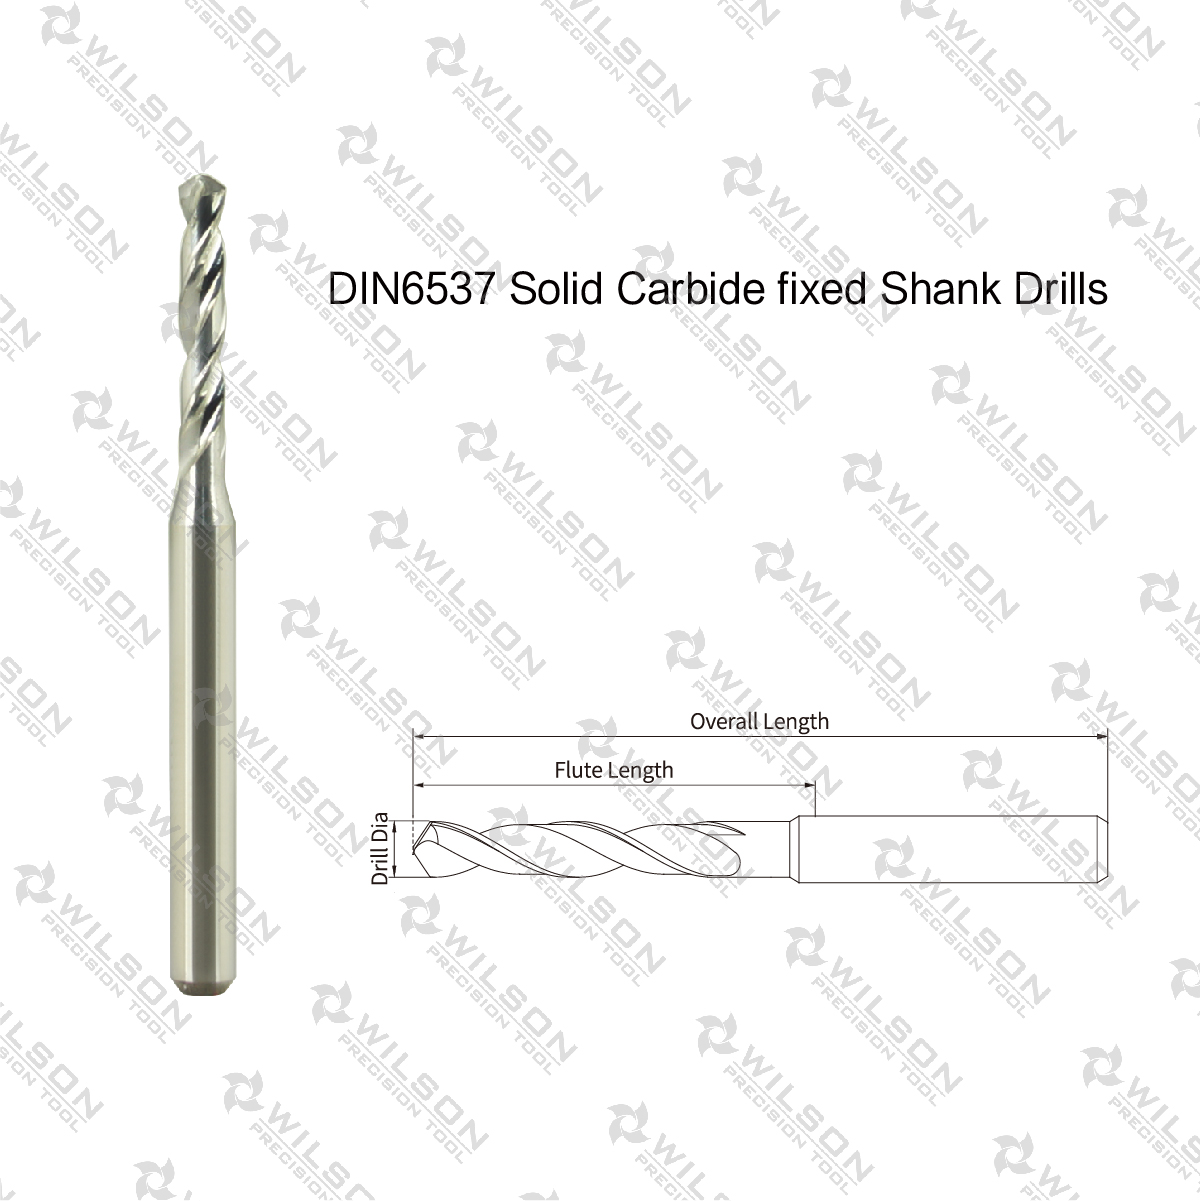 Fixed Shank Drills - DIN6537